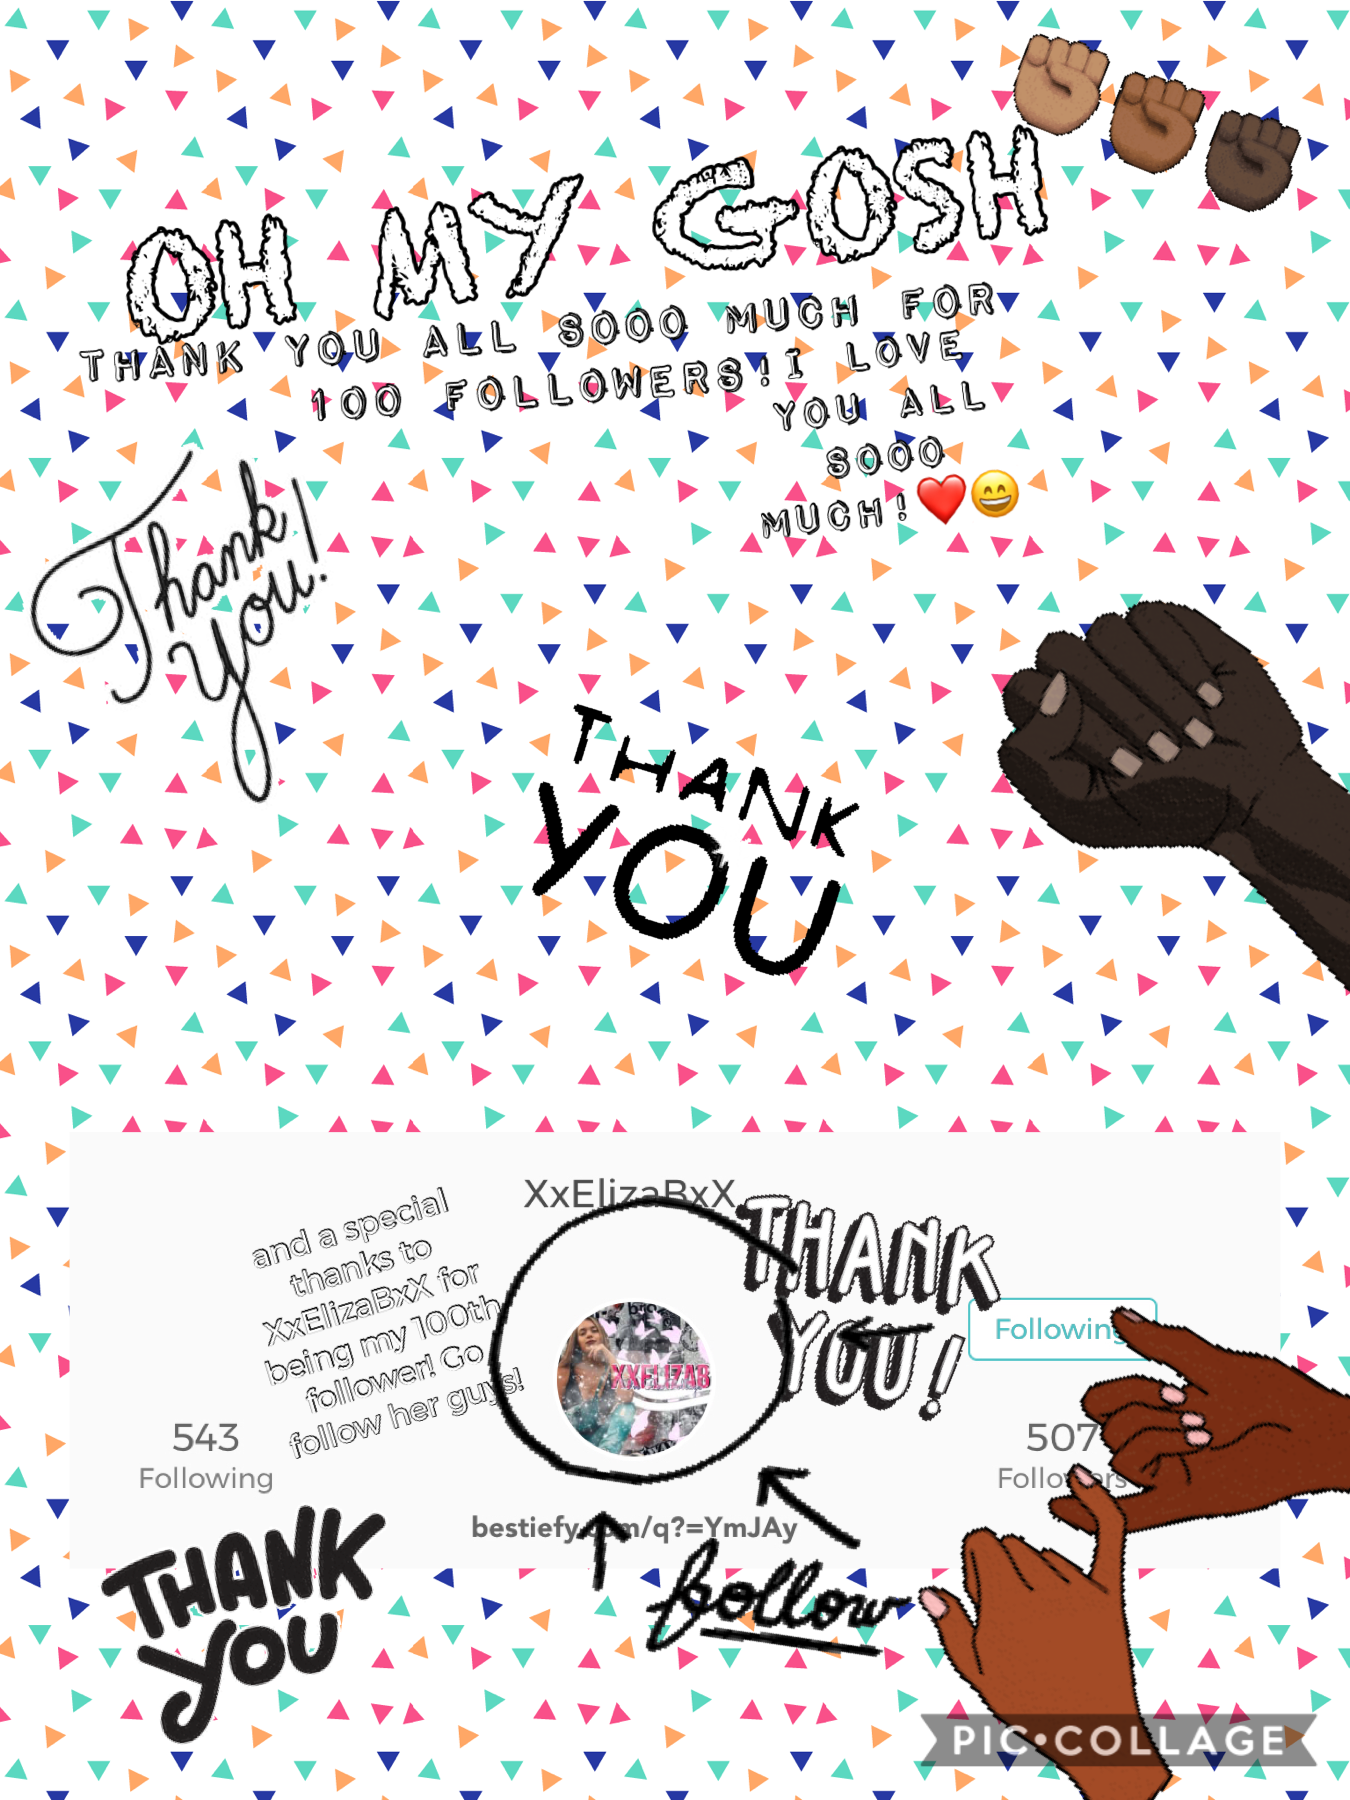 100 FOLLOWERS! Thank you all sooo much!❤️😄 #BLACKLIVESMATTER #LGBTS+